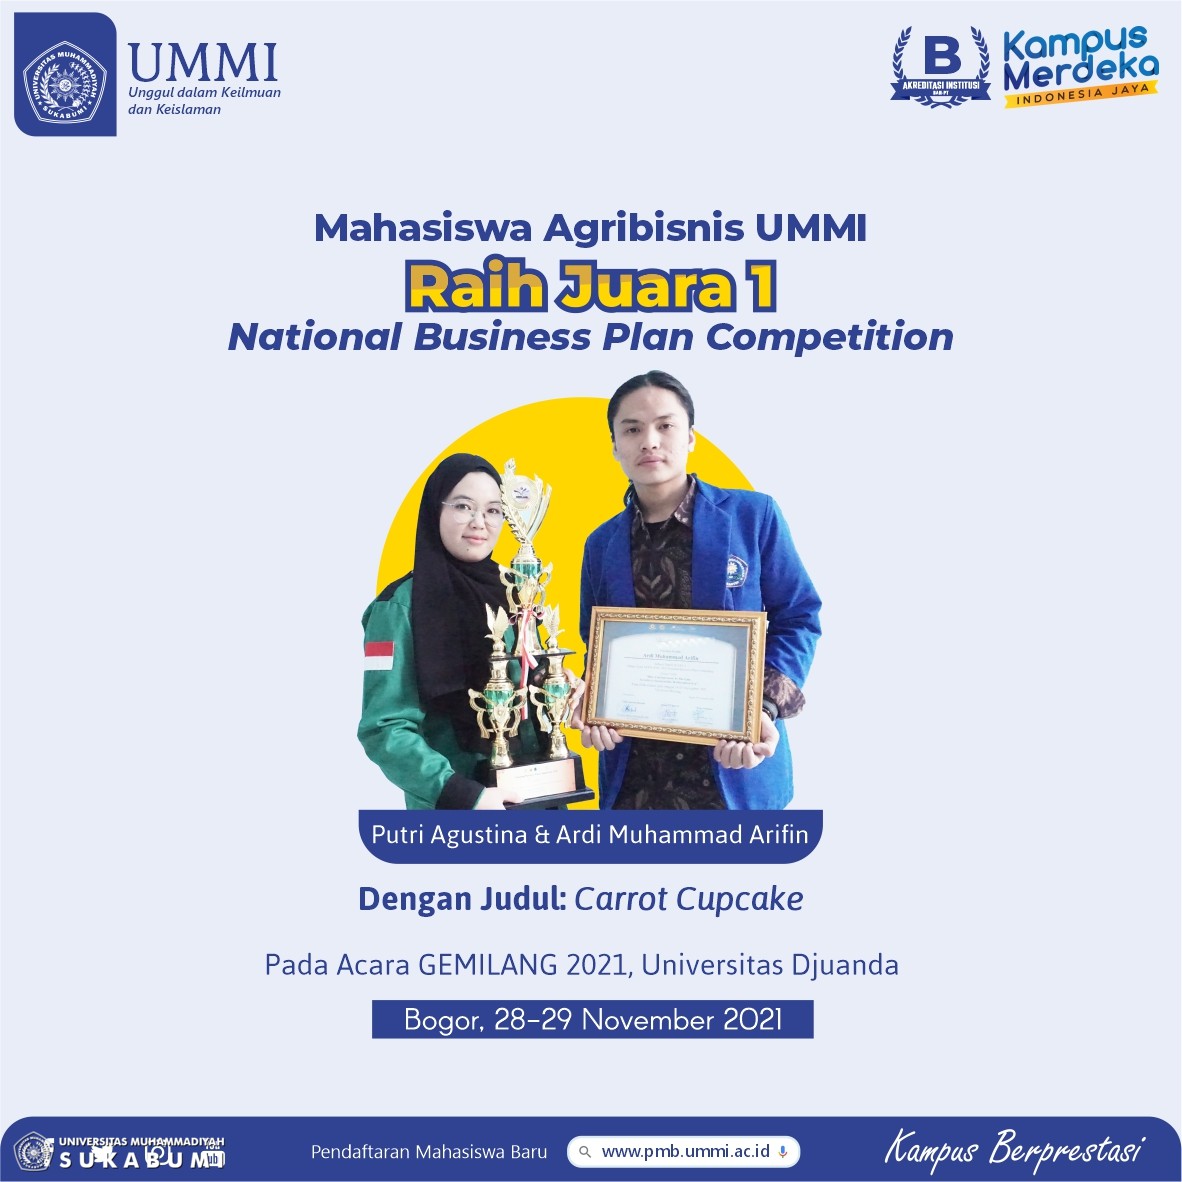 Mahasiswa Agribisnis UMMI  Raih Juara 1 National Business Plan Competition  